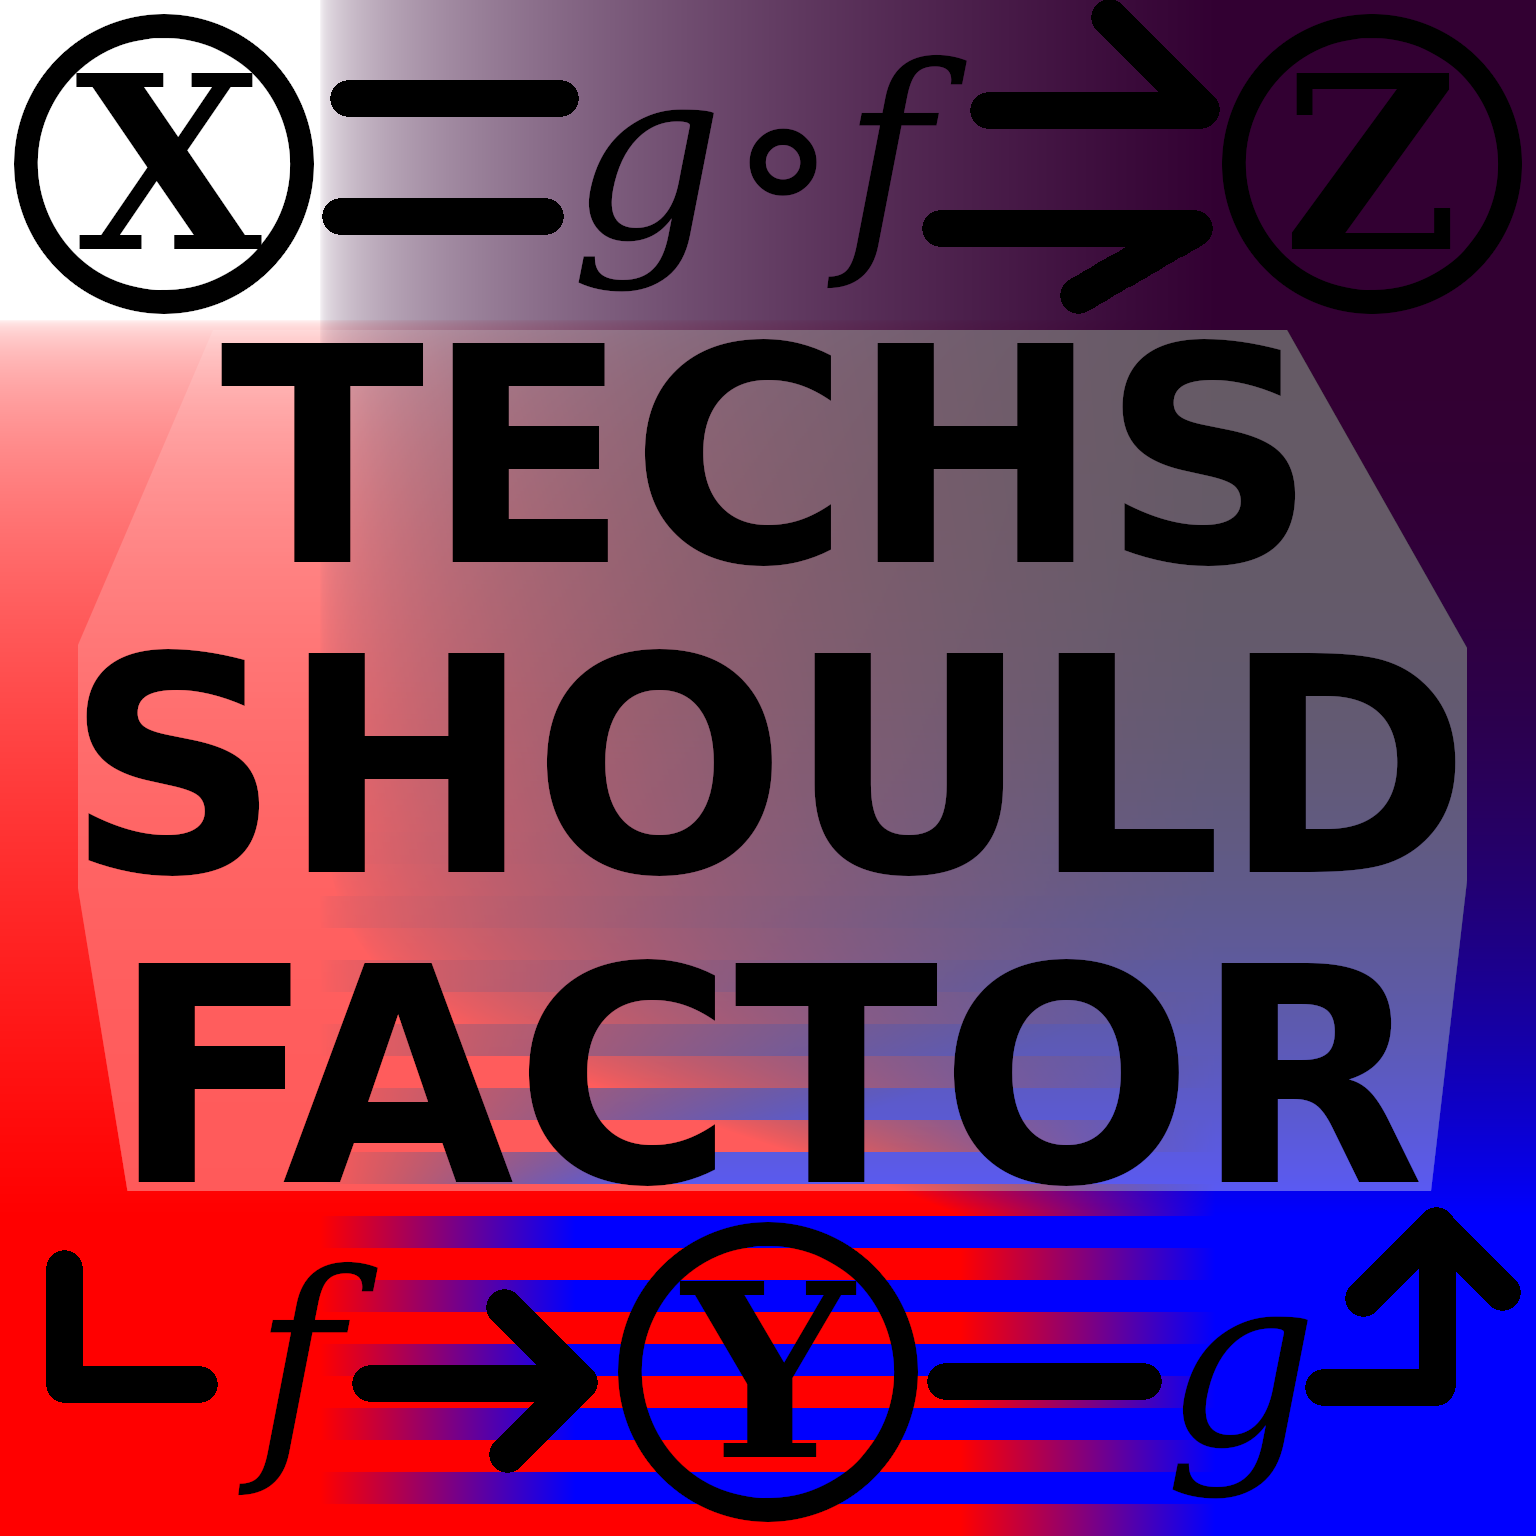 Techs should factor.